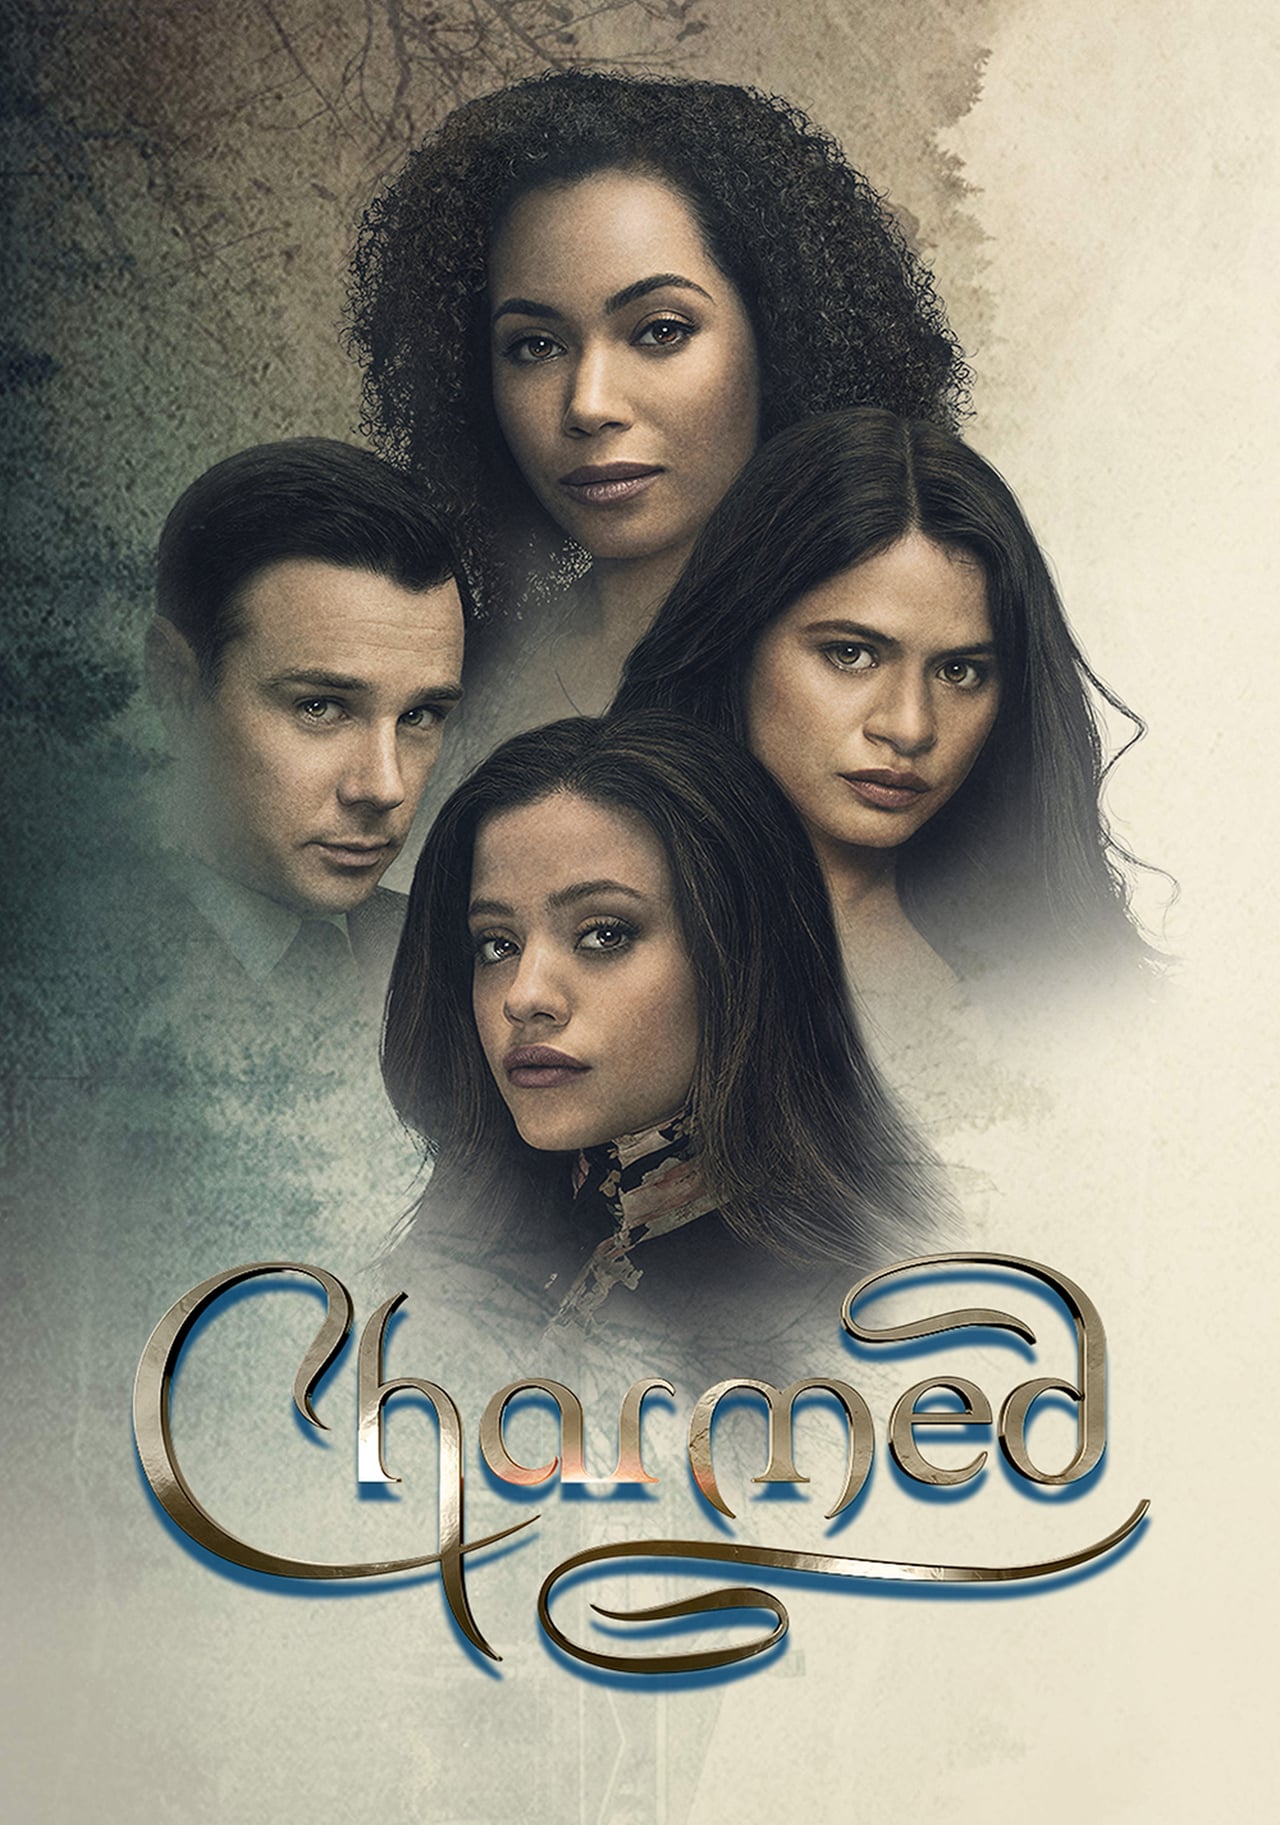 Charmed (season 3)